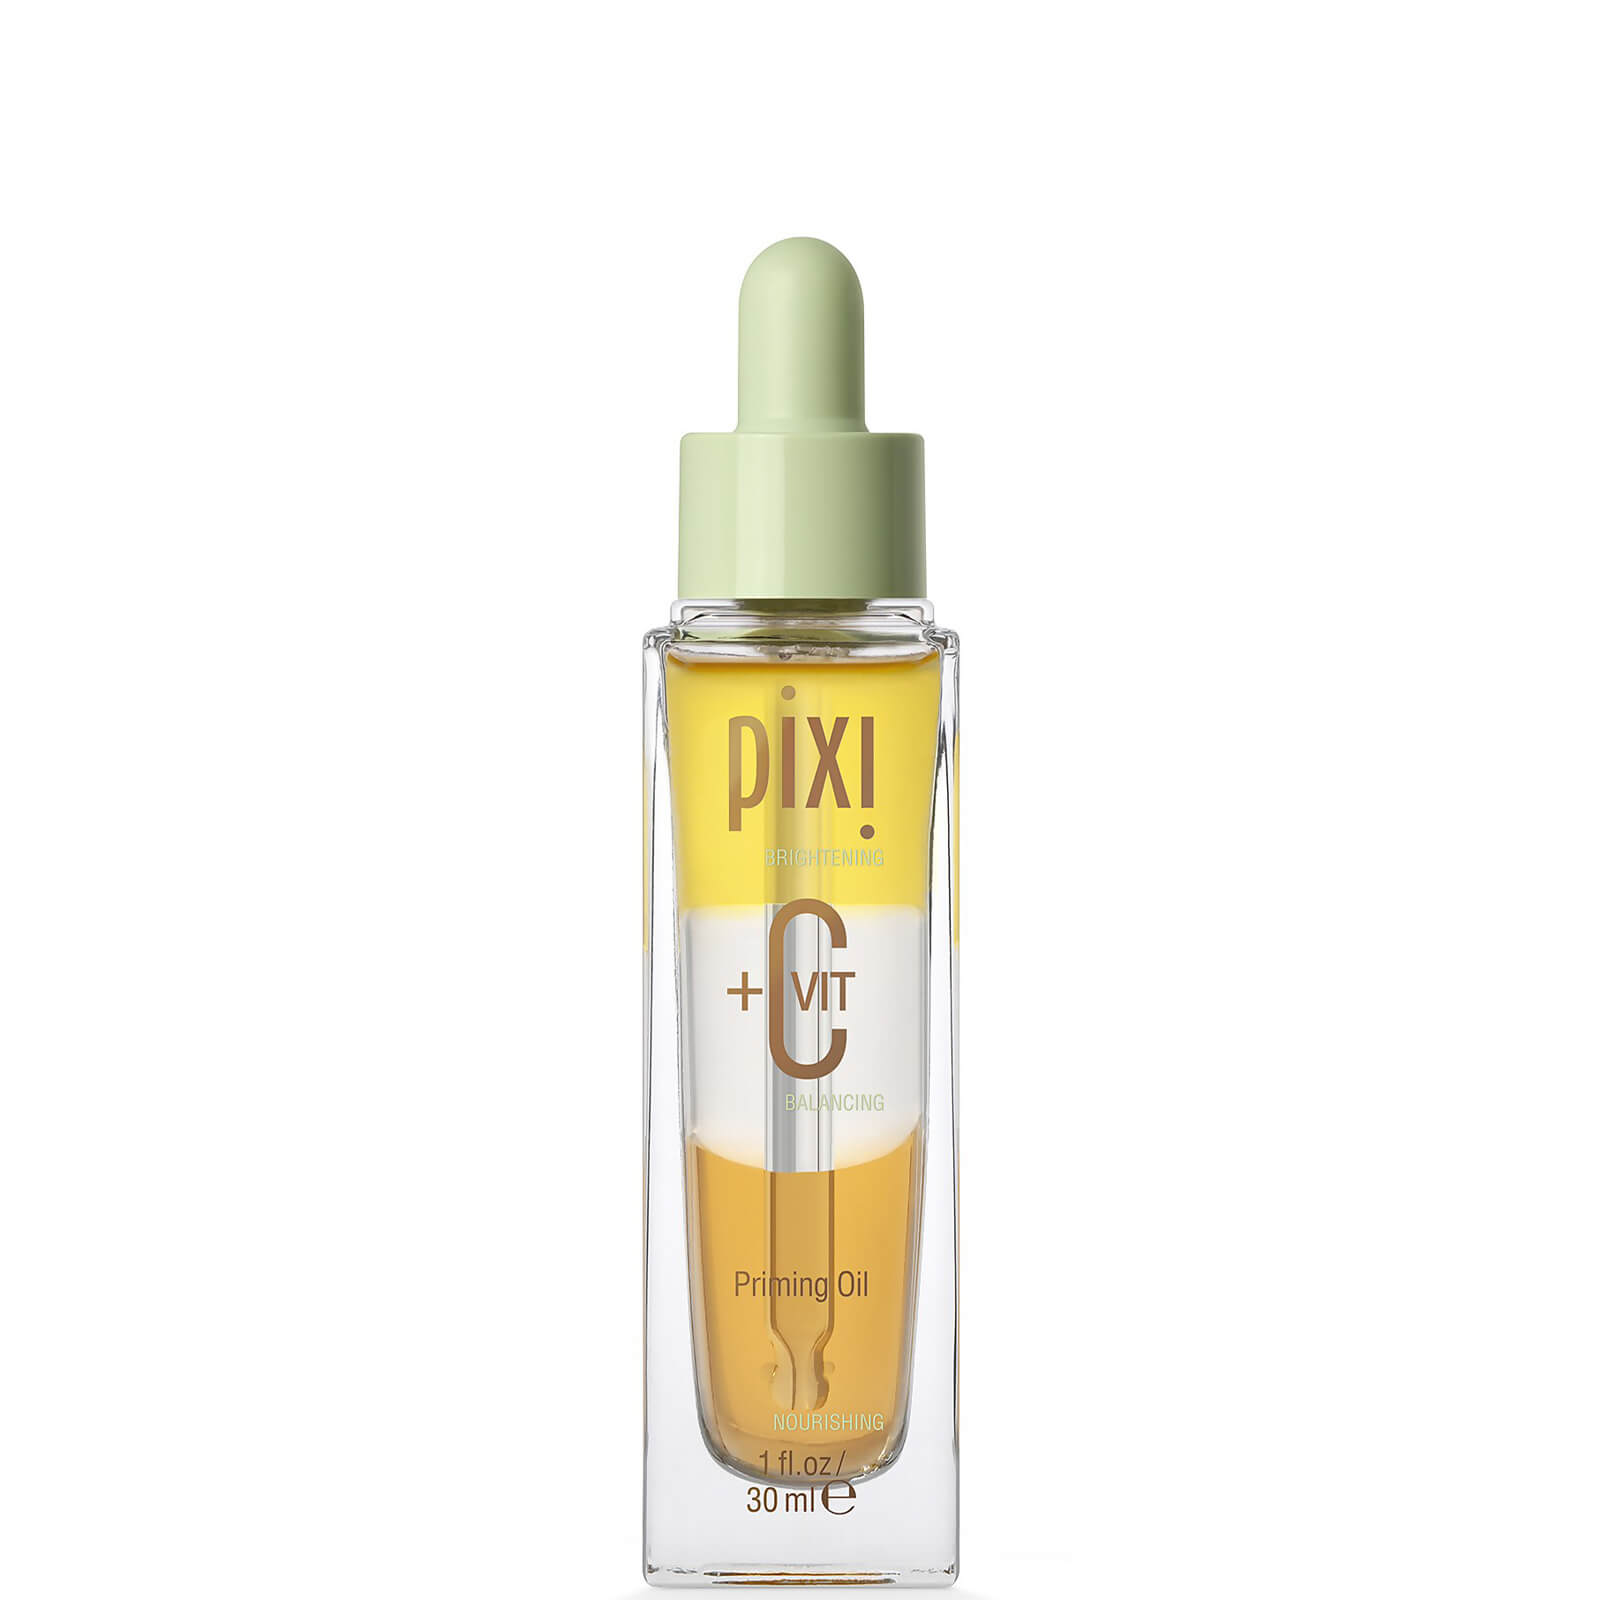 Image of PIXI +C VITTri-Phase Beauty Oil 30ml Primer